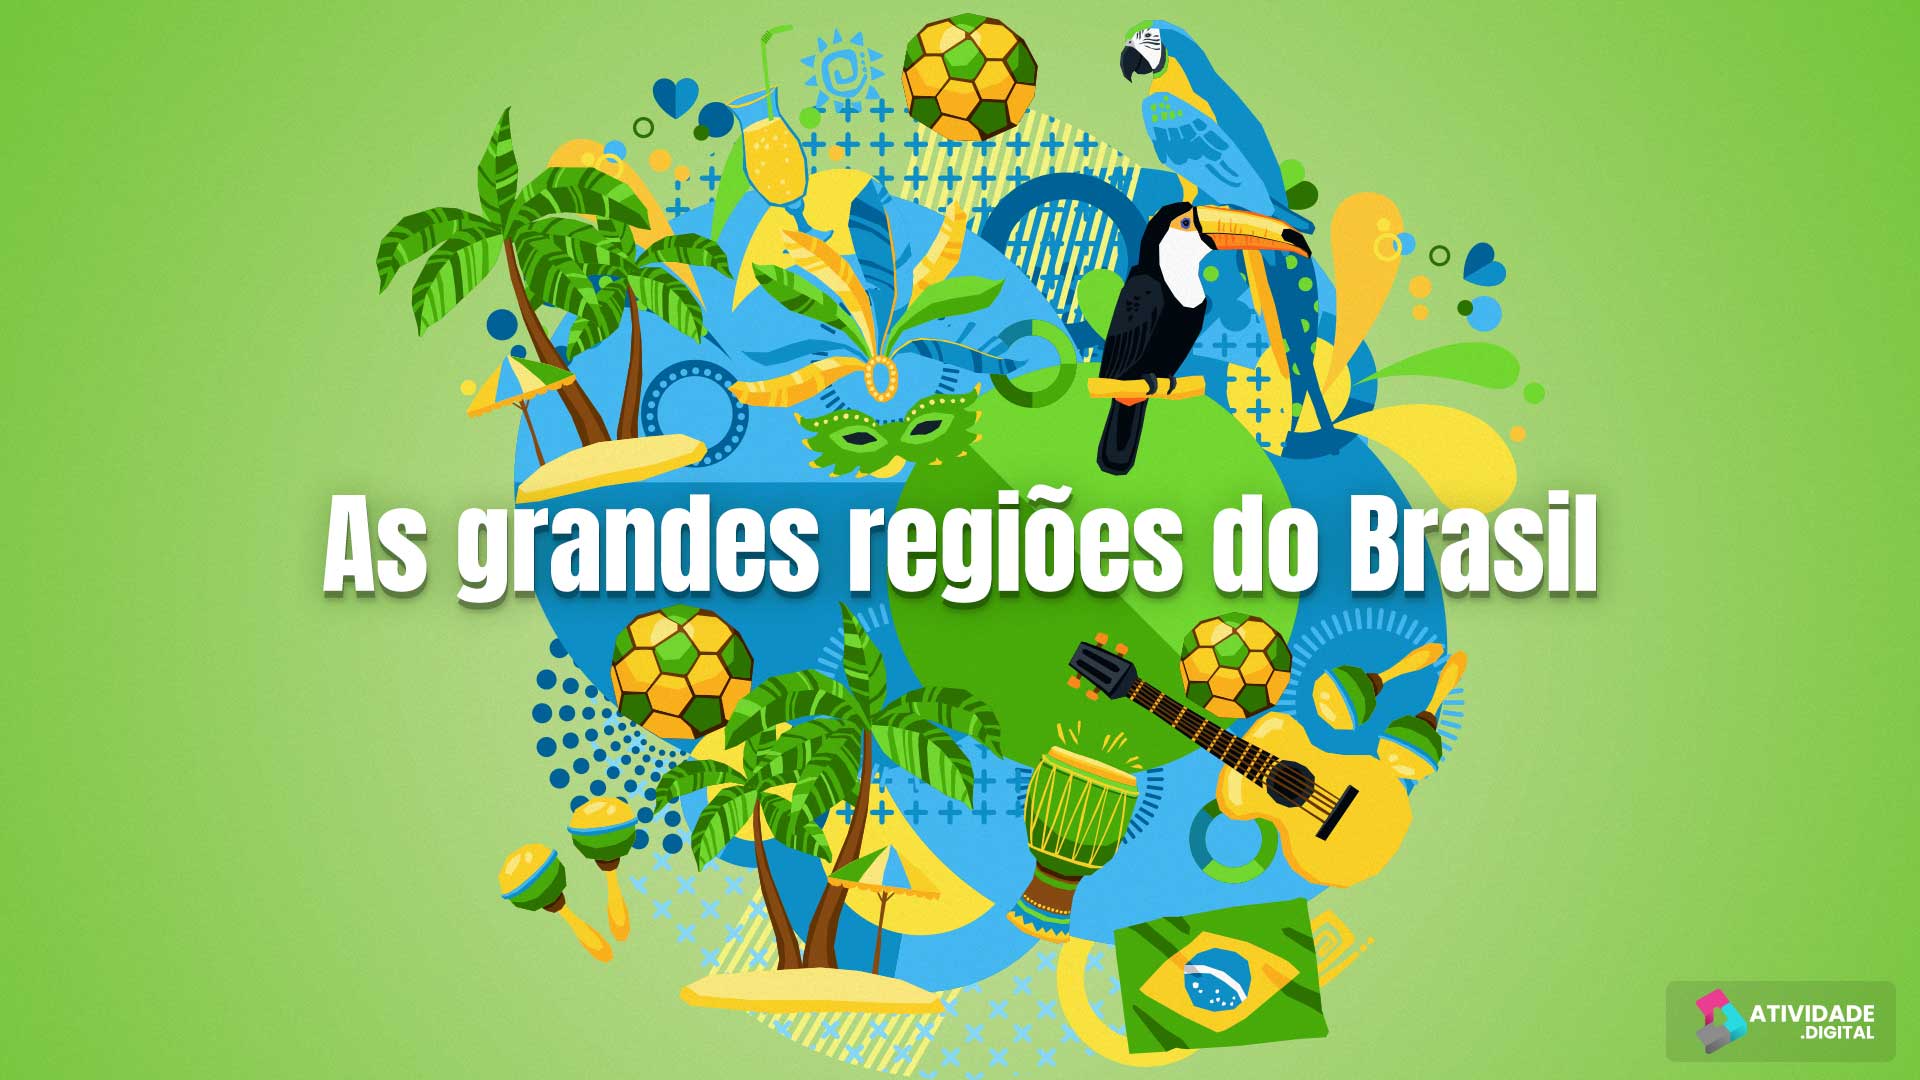  As grandes regiões do Brasil